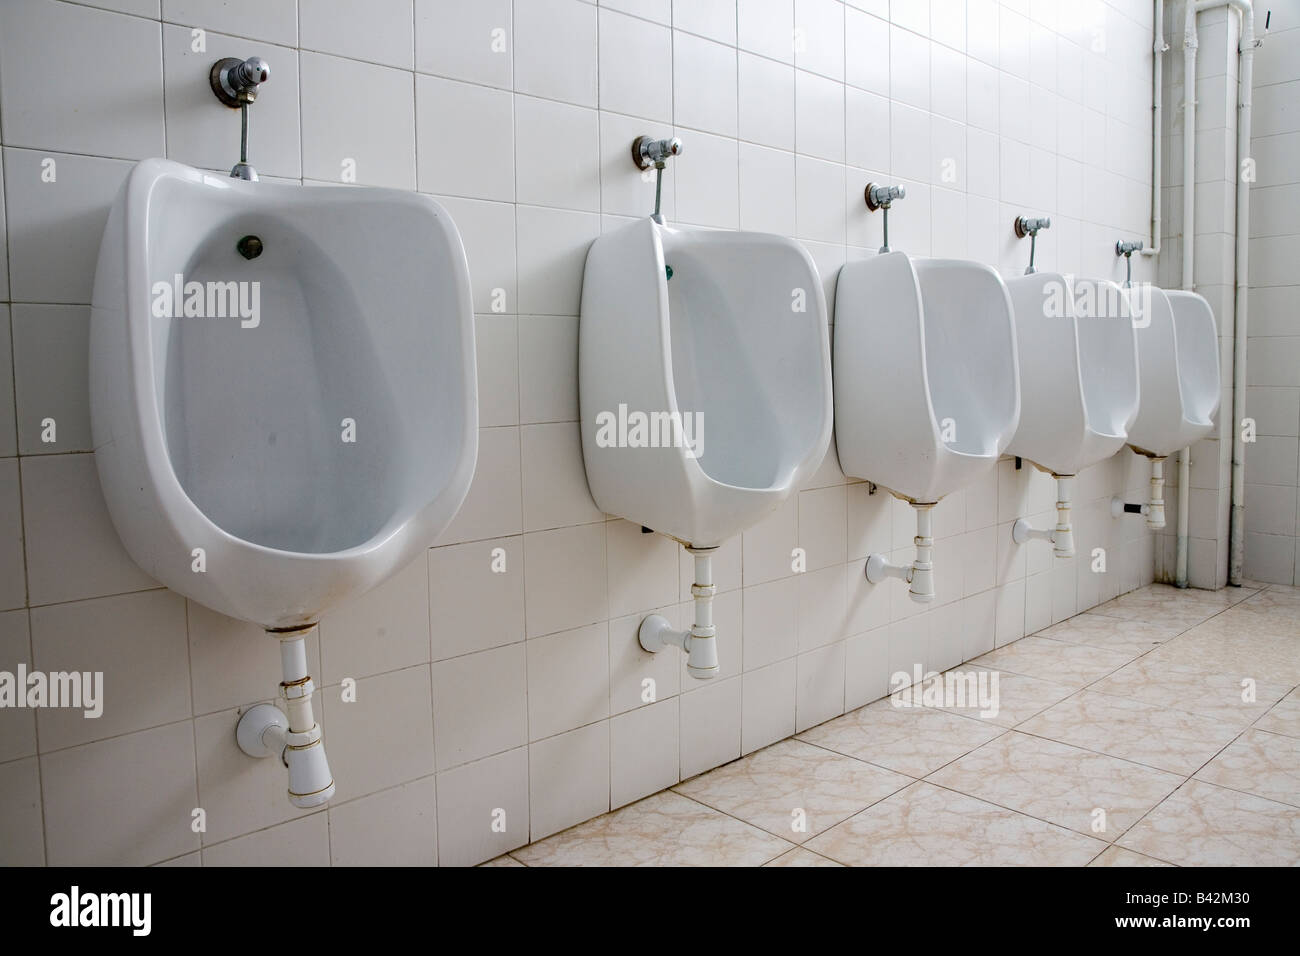 Urinario masculino portátil fotografías e imágenes de alta resolución -  Alamy